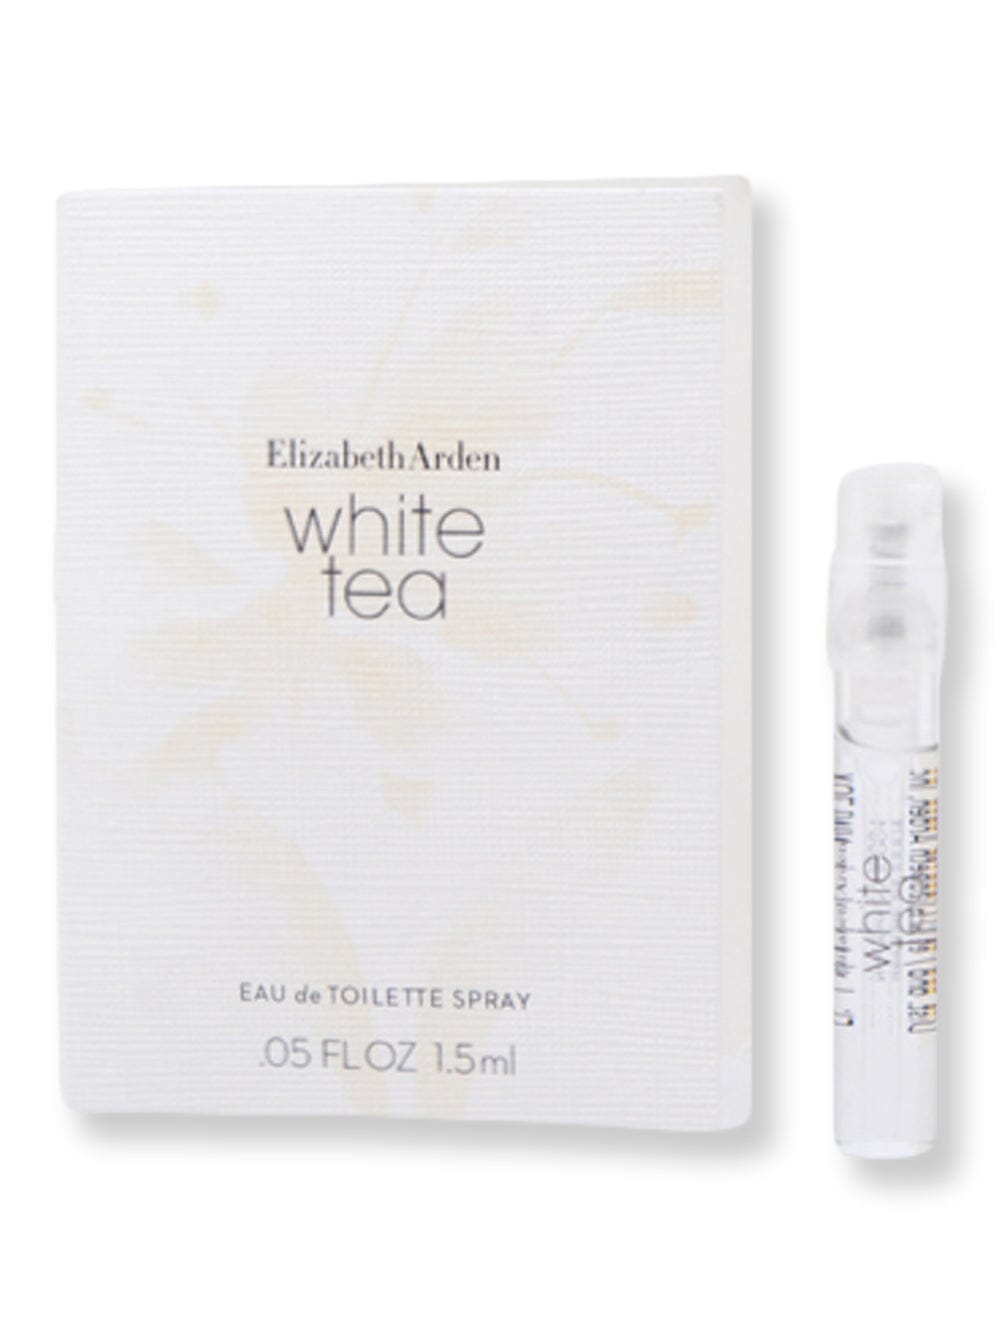 Elizabeth Arden Elizabeth Arden White Tea EDT Spray On Card 0.05 oz1.5 ml Perfume 